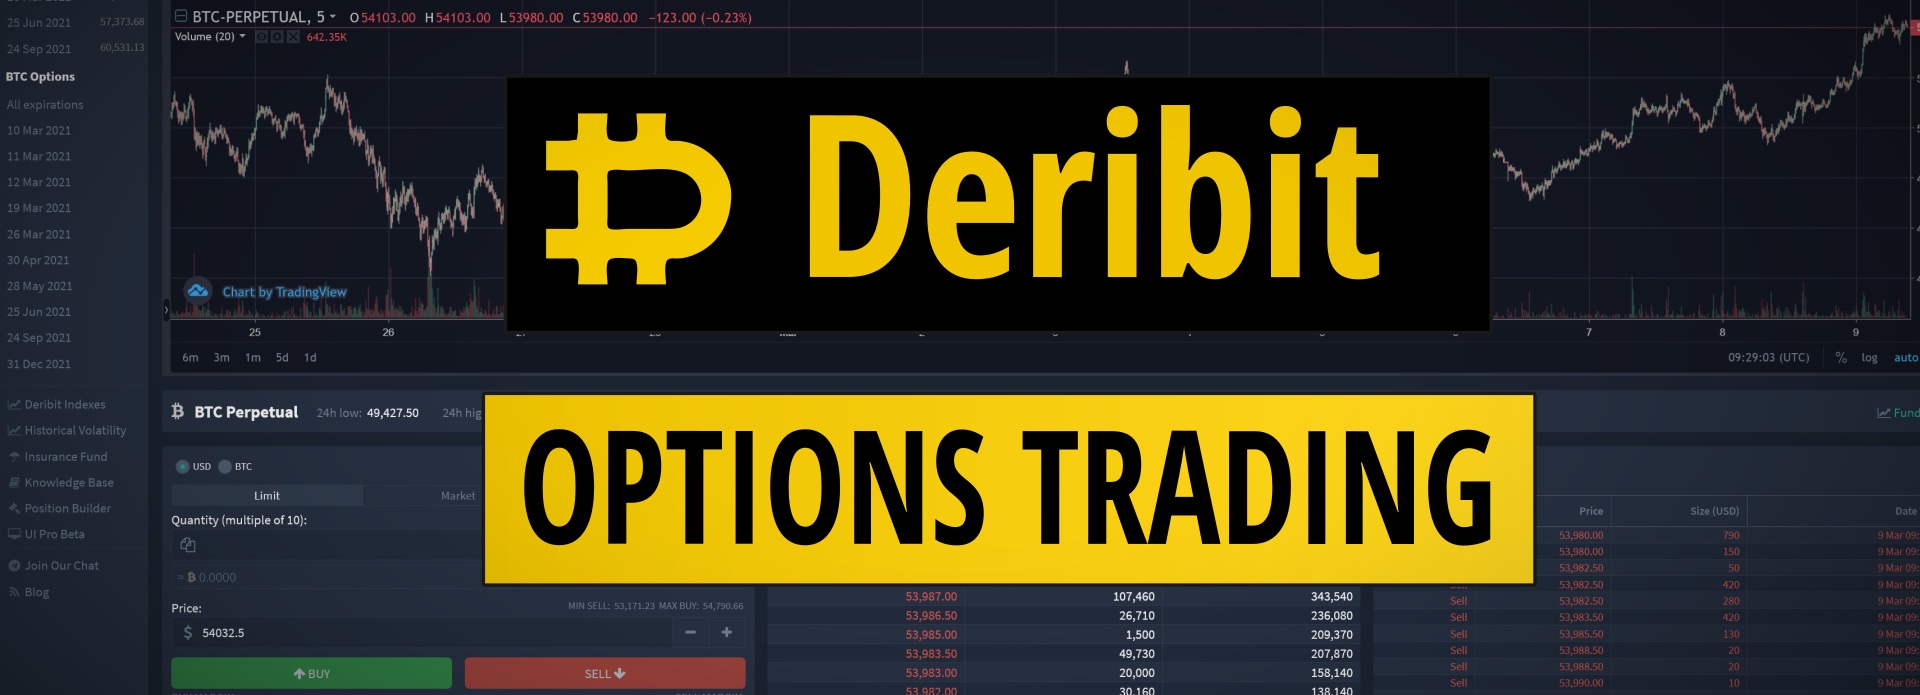 deribit options trading